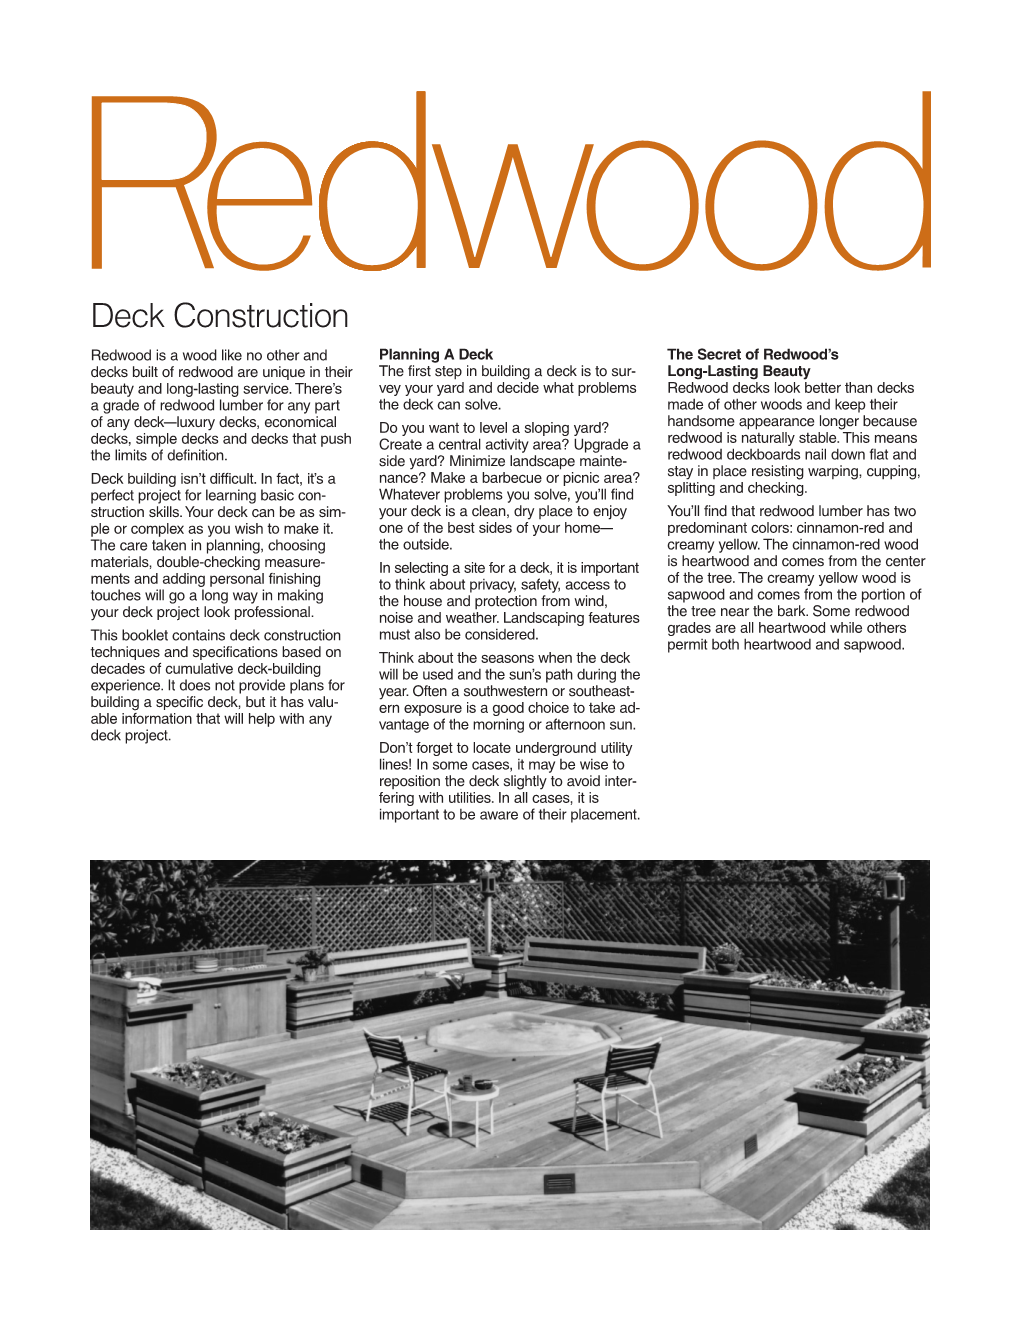 Redwood Deck Construction